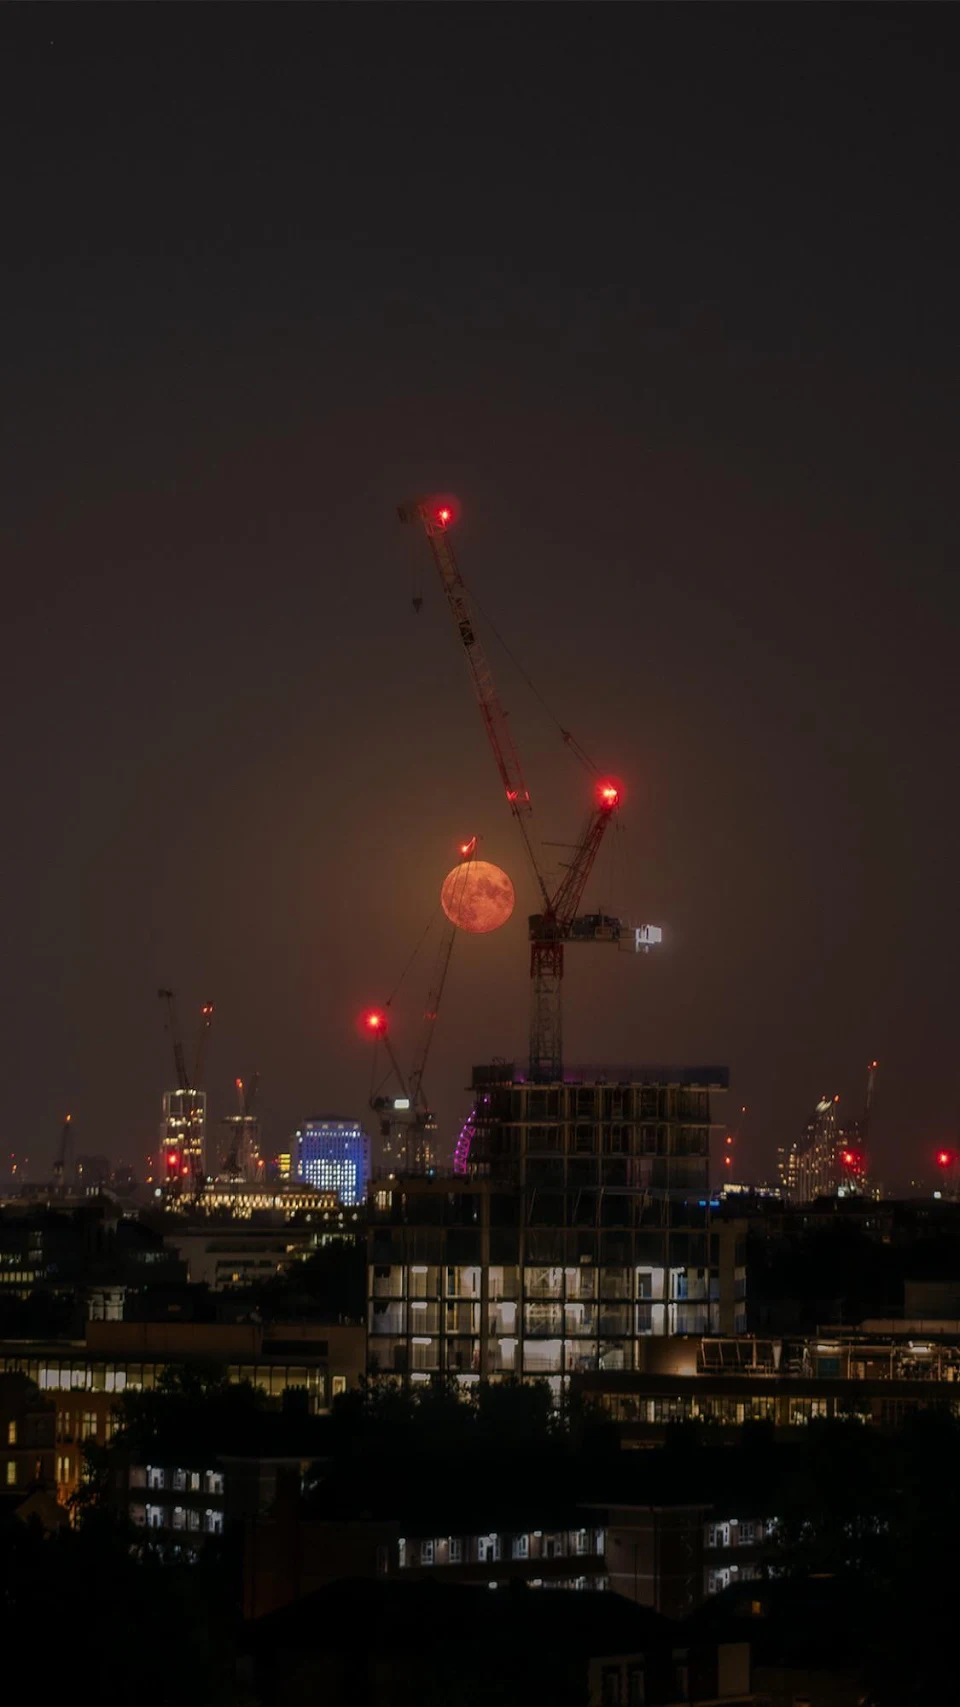 The blood moon over London last night